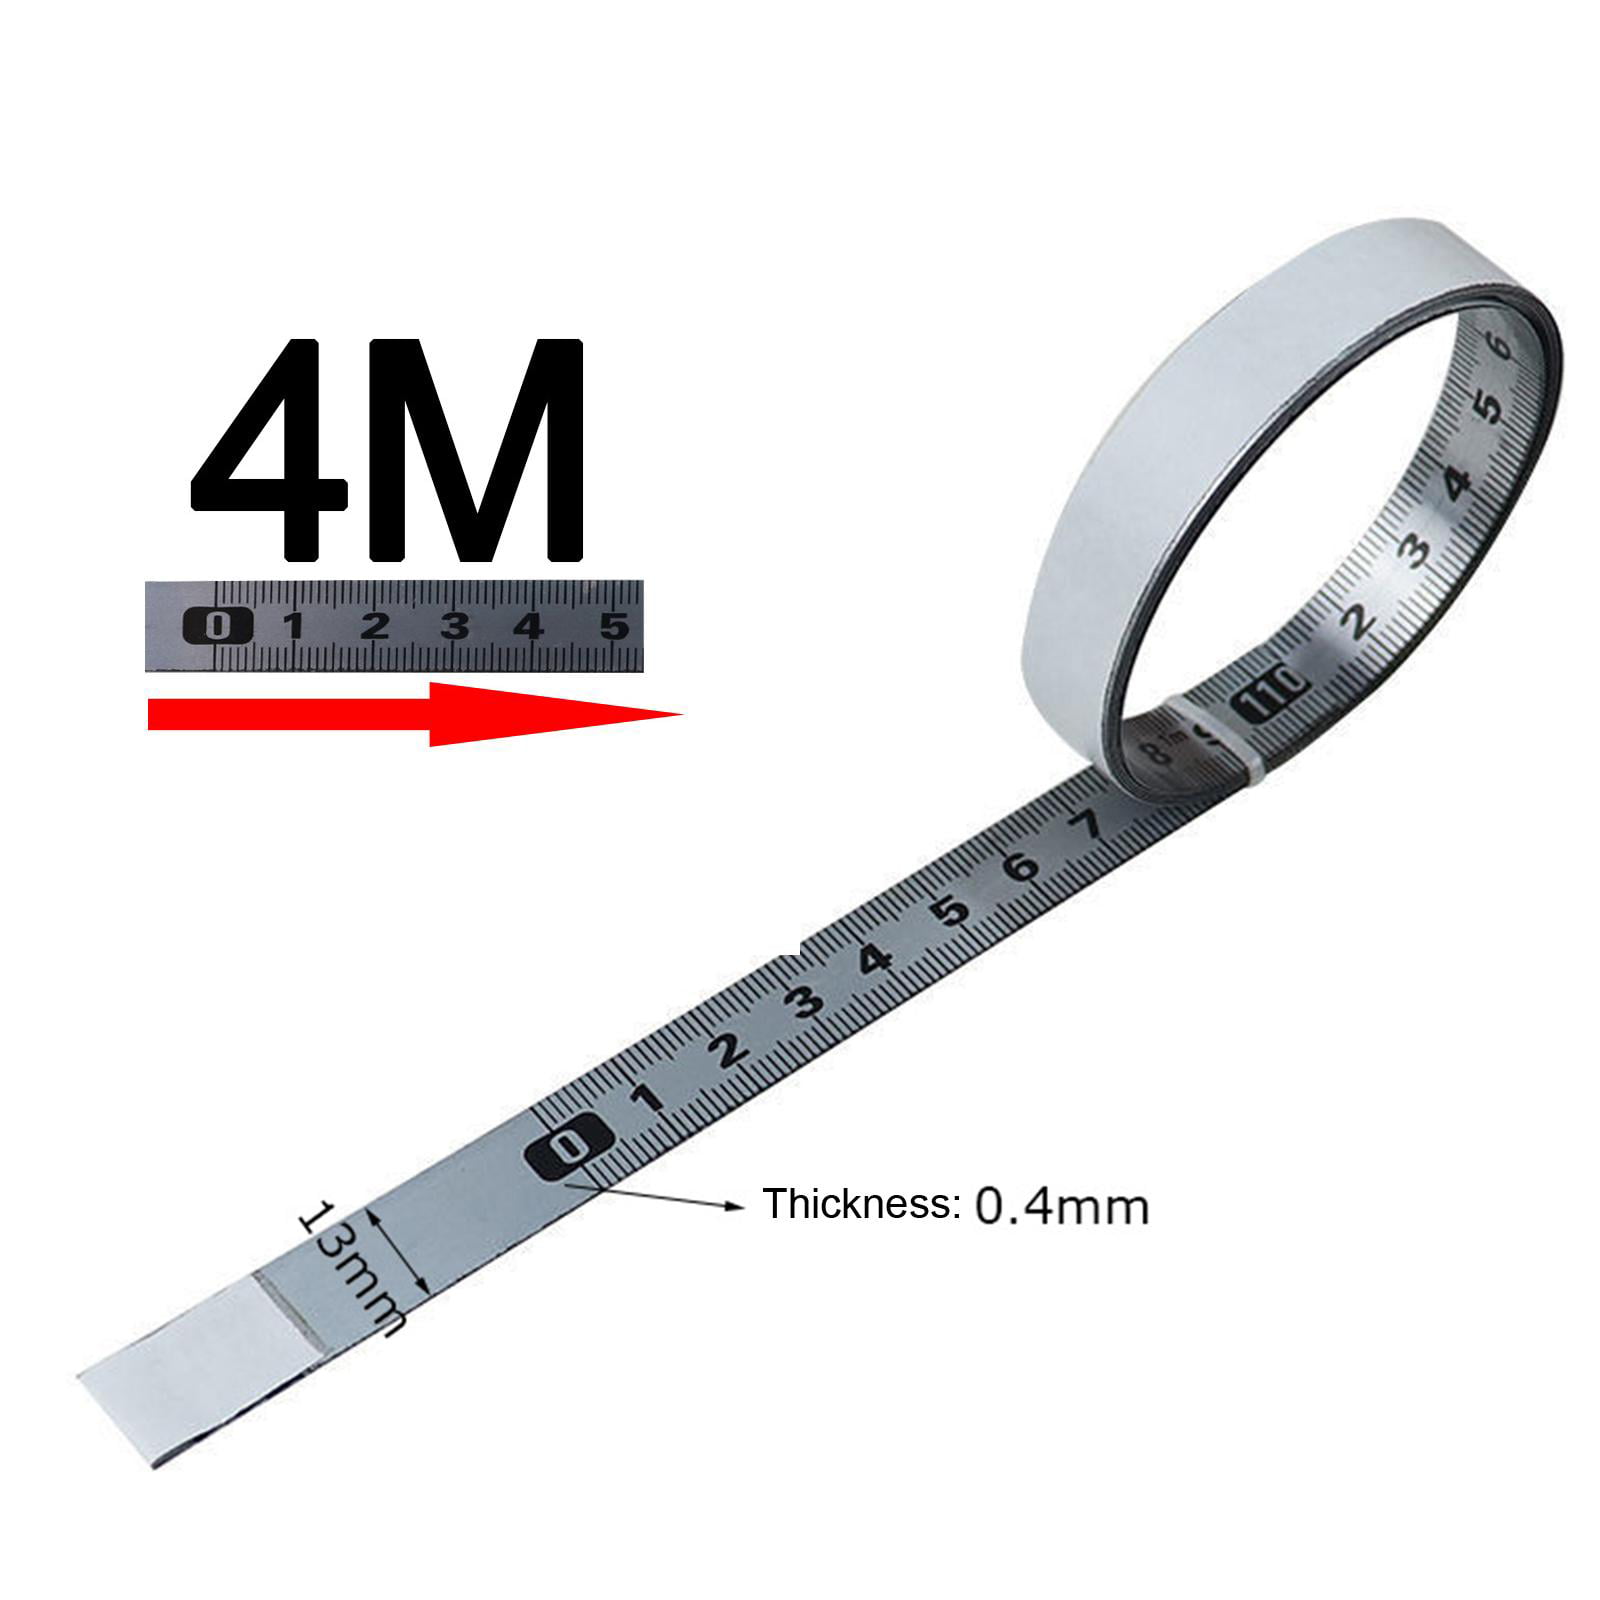 Prasacco 3 Pcs Self Adhesive Measuring Tape, Workbench Ruler